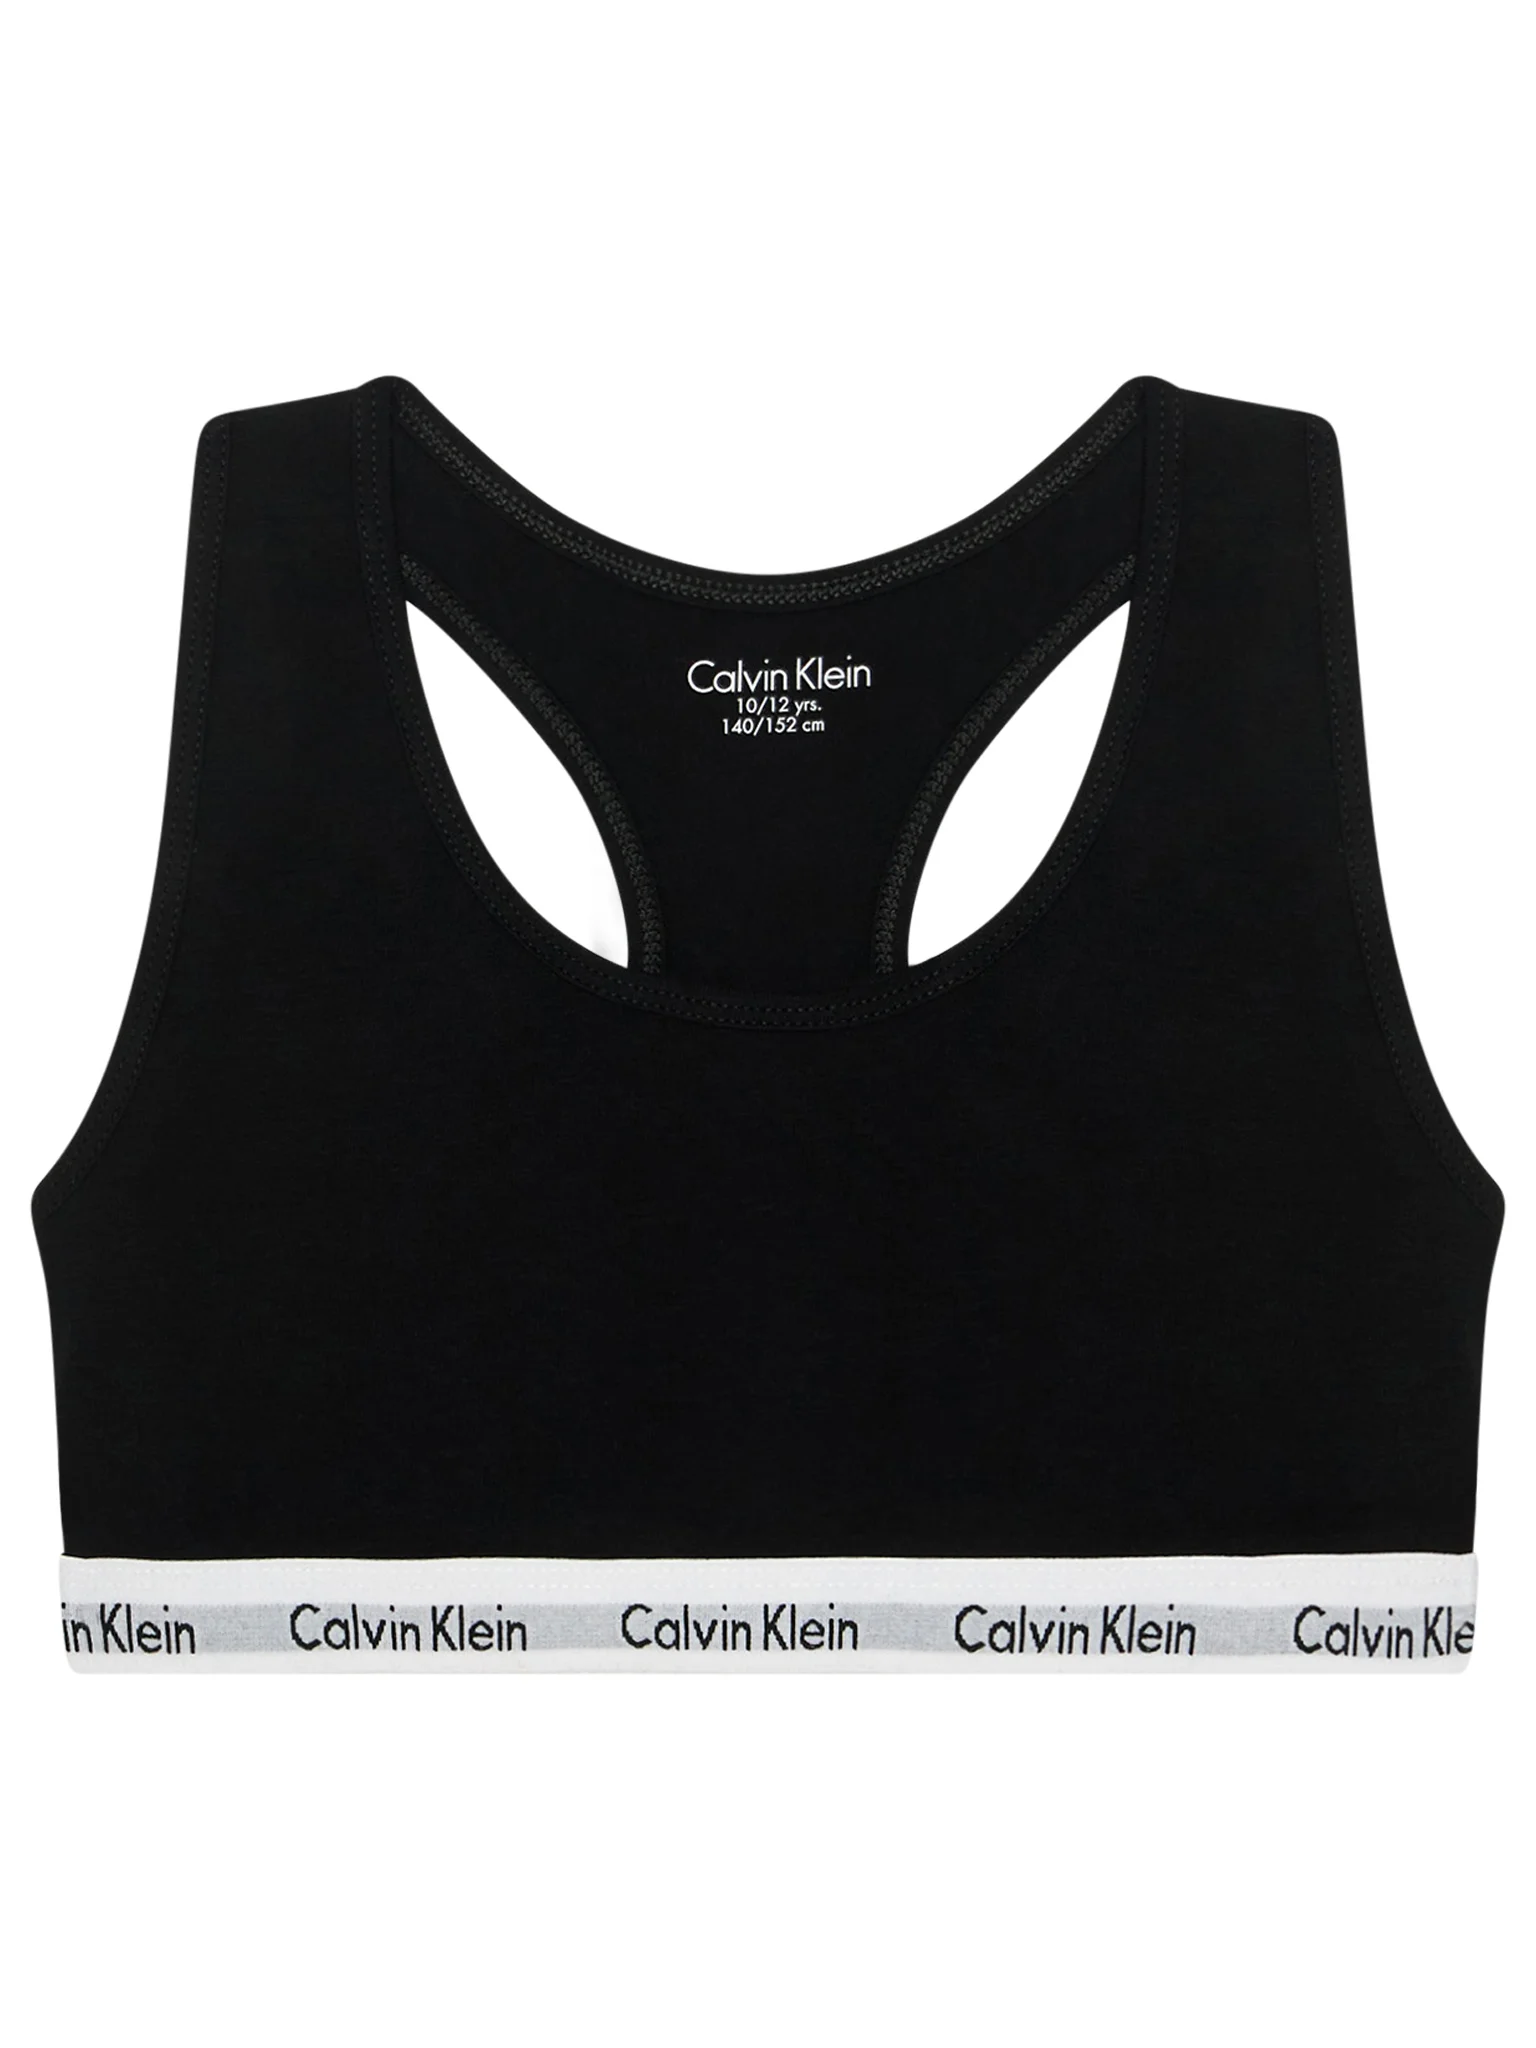 Calvin Klein - 2PACK TOP - G897000